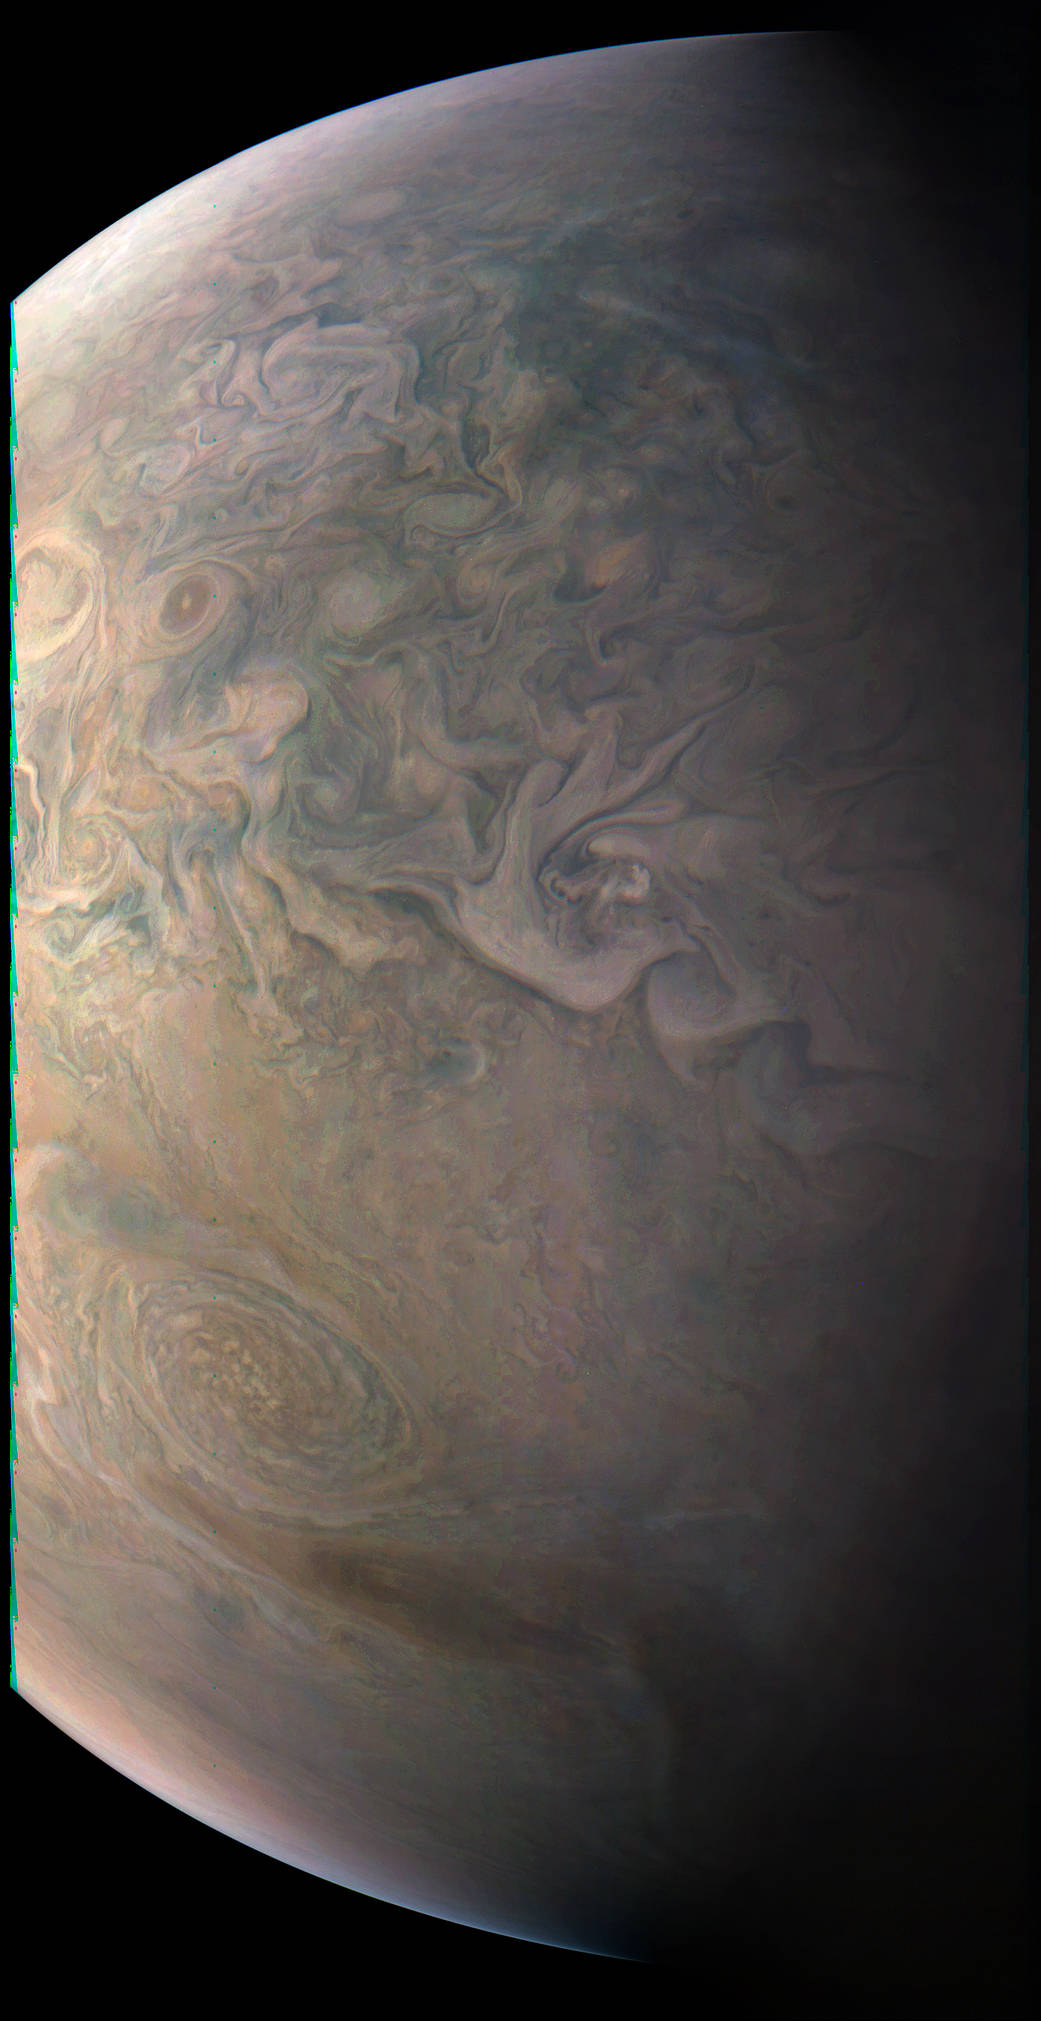 © NASA - Cliché de la géante gazeuse Jupiter https://www.nasa.gov/image-feature/jpl/pia21378/juno-s-close-look-at-a-little-red-spot